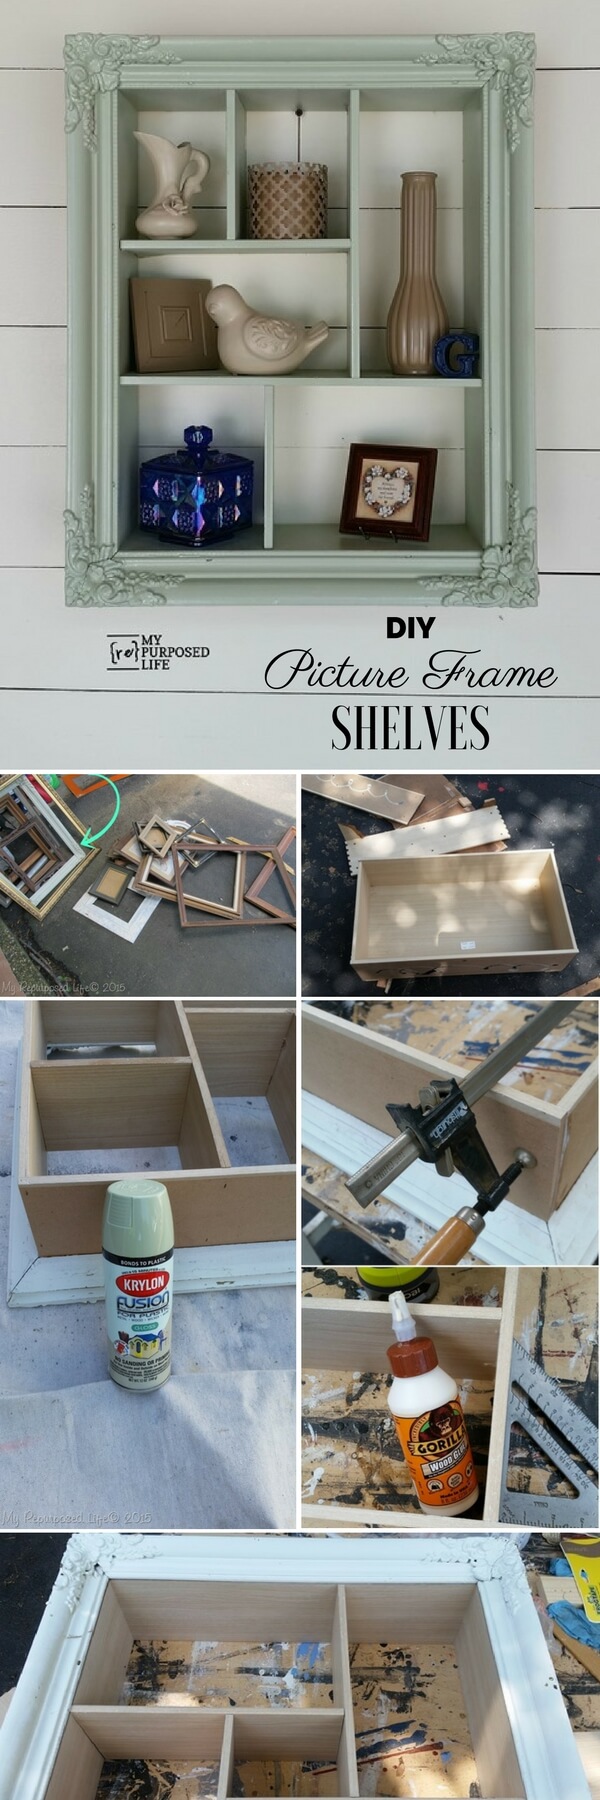 picture-frame-shelves-k4craft Easy DIY Home Decor Crafts - Step by step